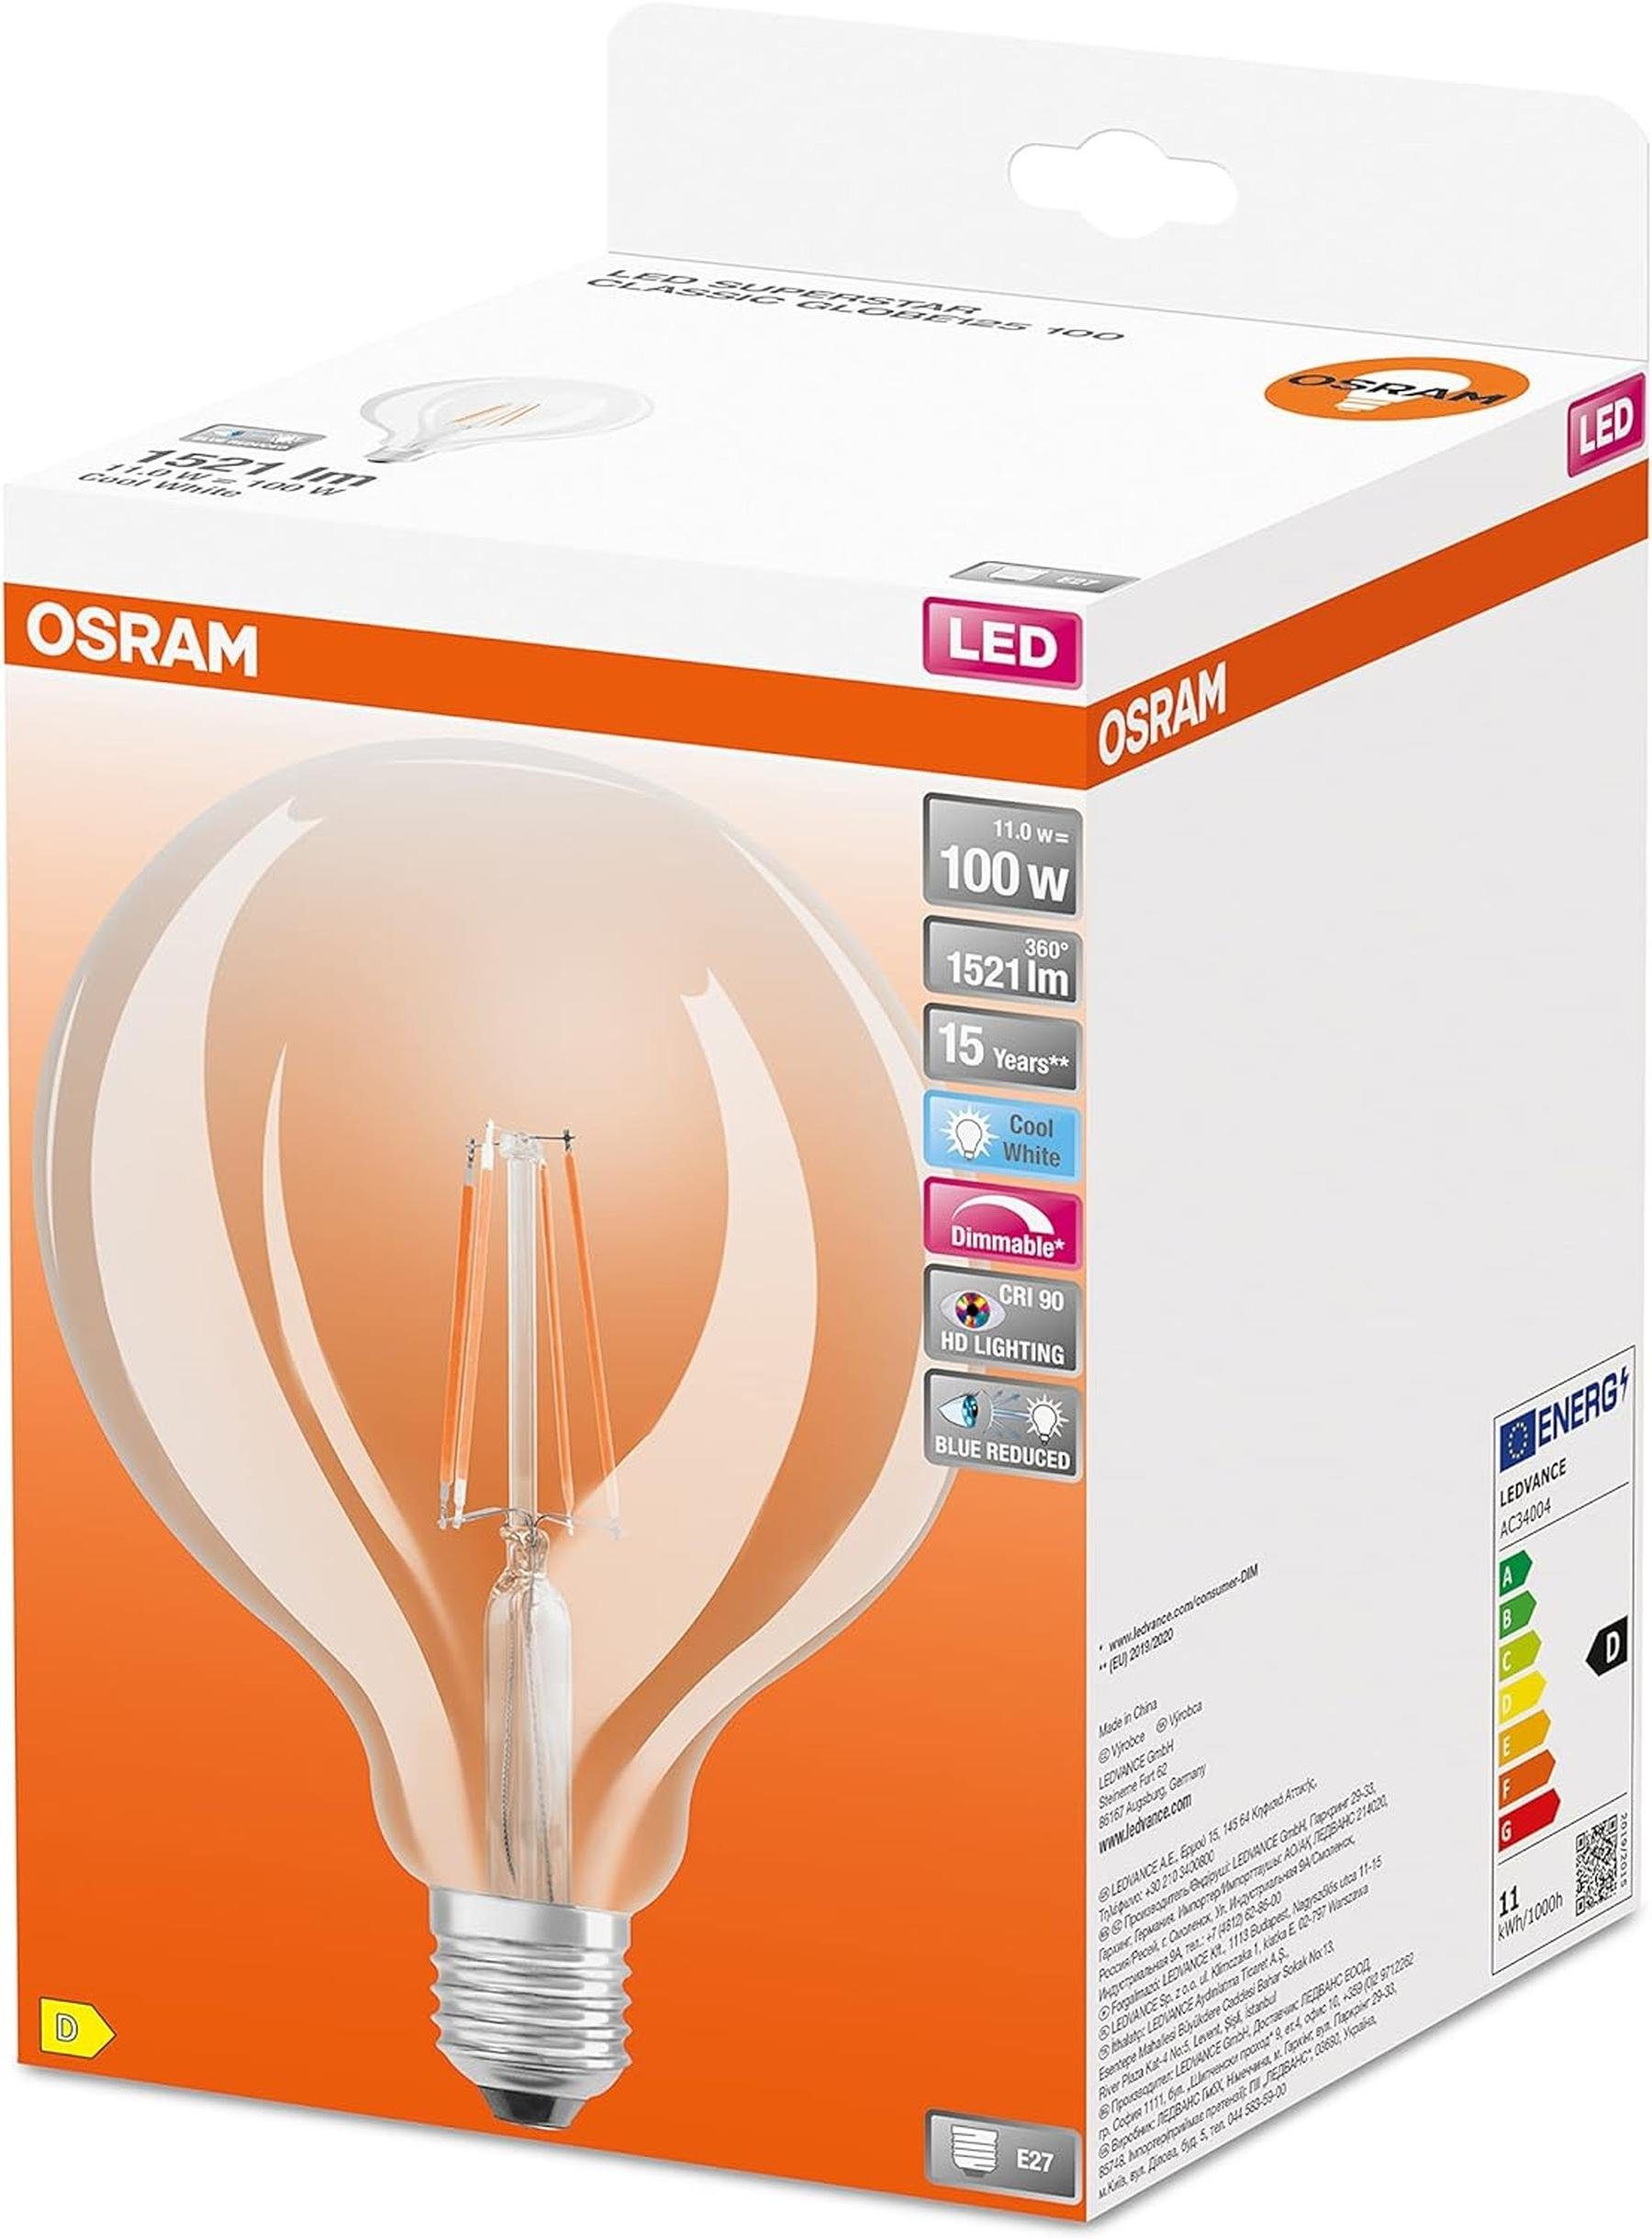 Filament-Optik Kaltweiß, dimmbare Osram Superstar E27, 2ER, LED-Leuchtmittel OSRAM LED-Lampe